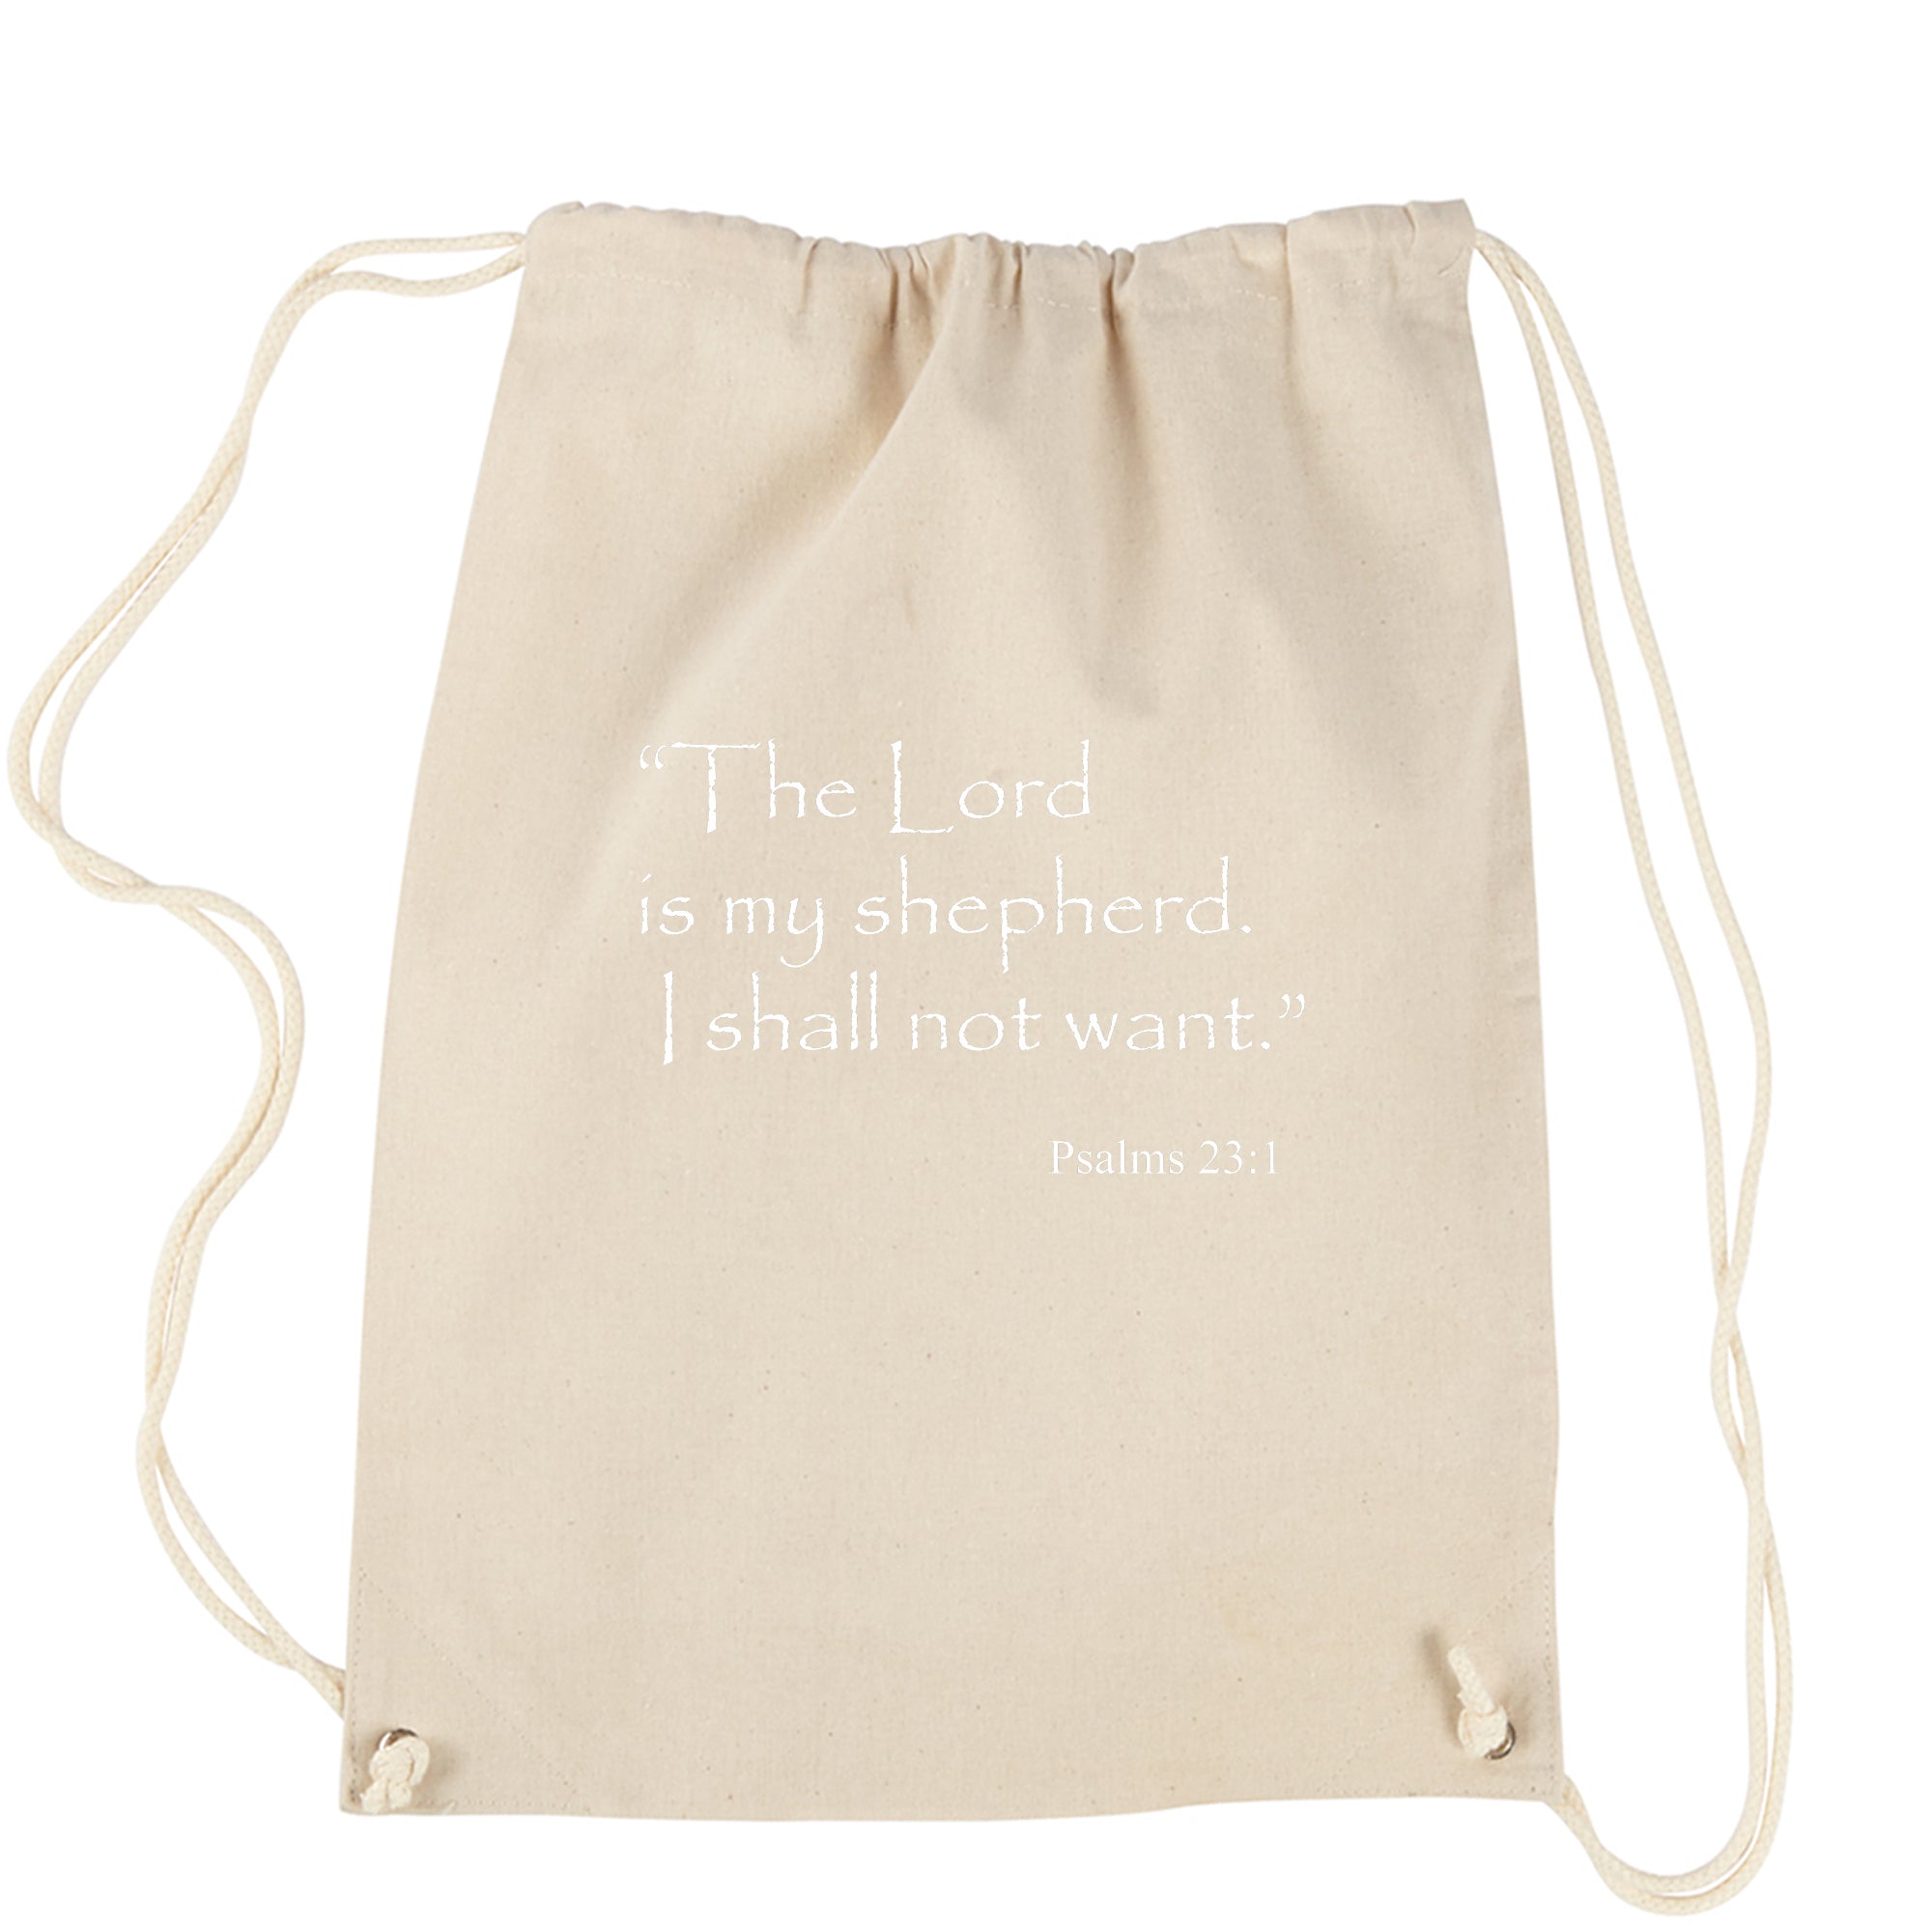 Lord is my shepherd Psalms 23:1 Bible Verse Drawstring Backpack